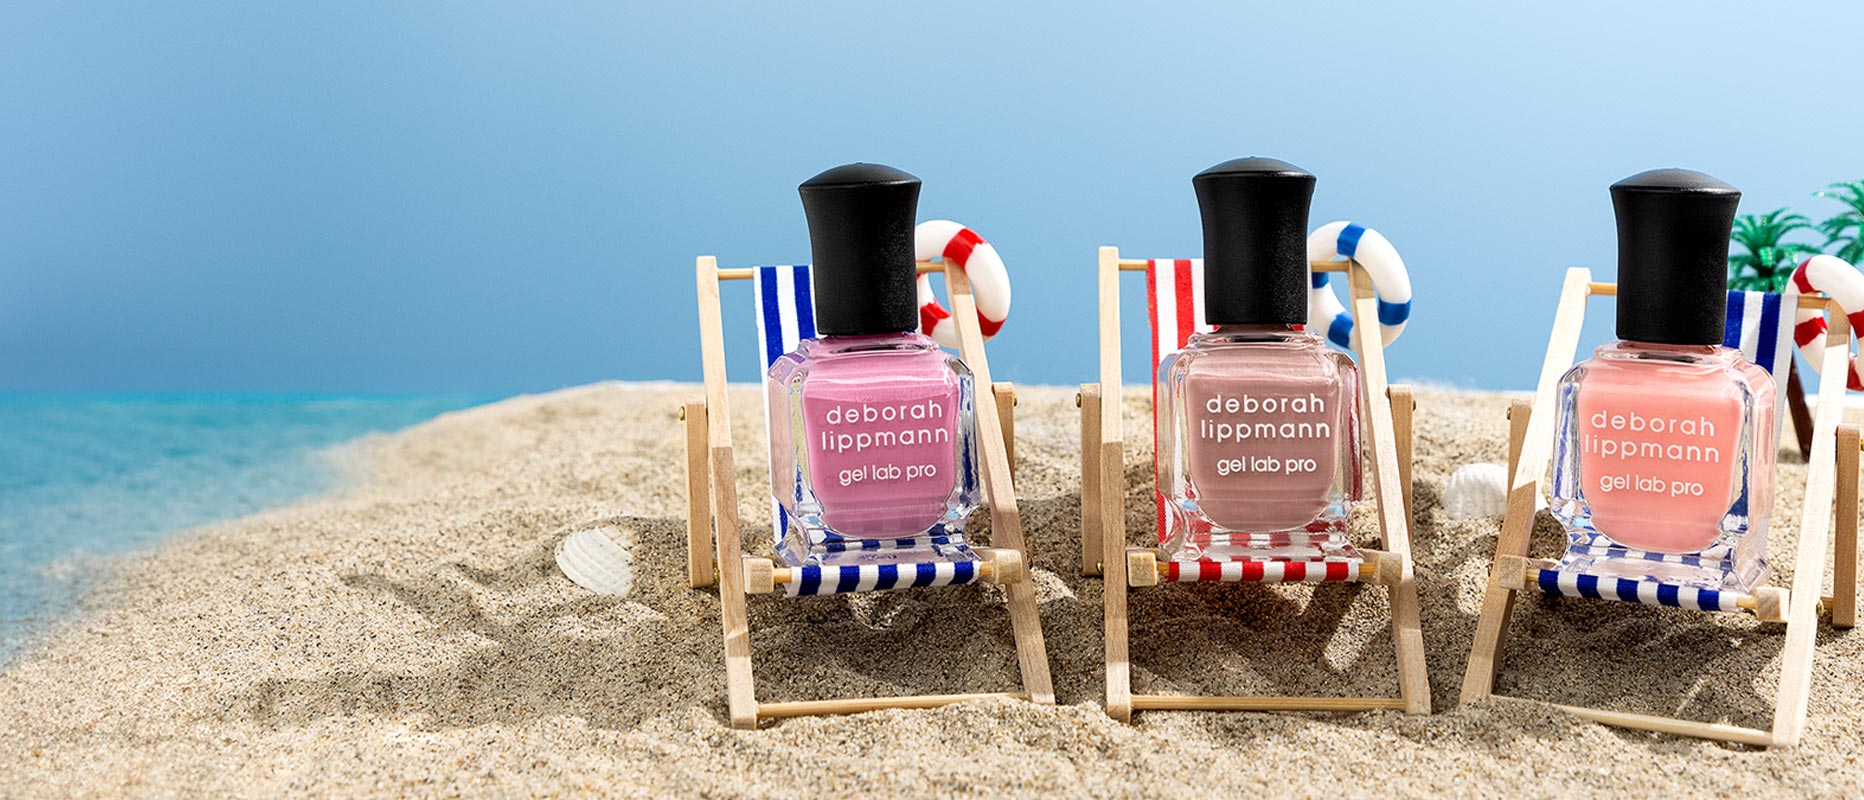 nail polish bottles sitting in beach chairs